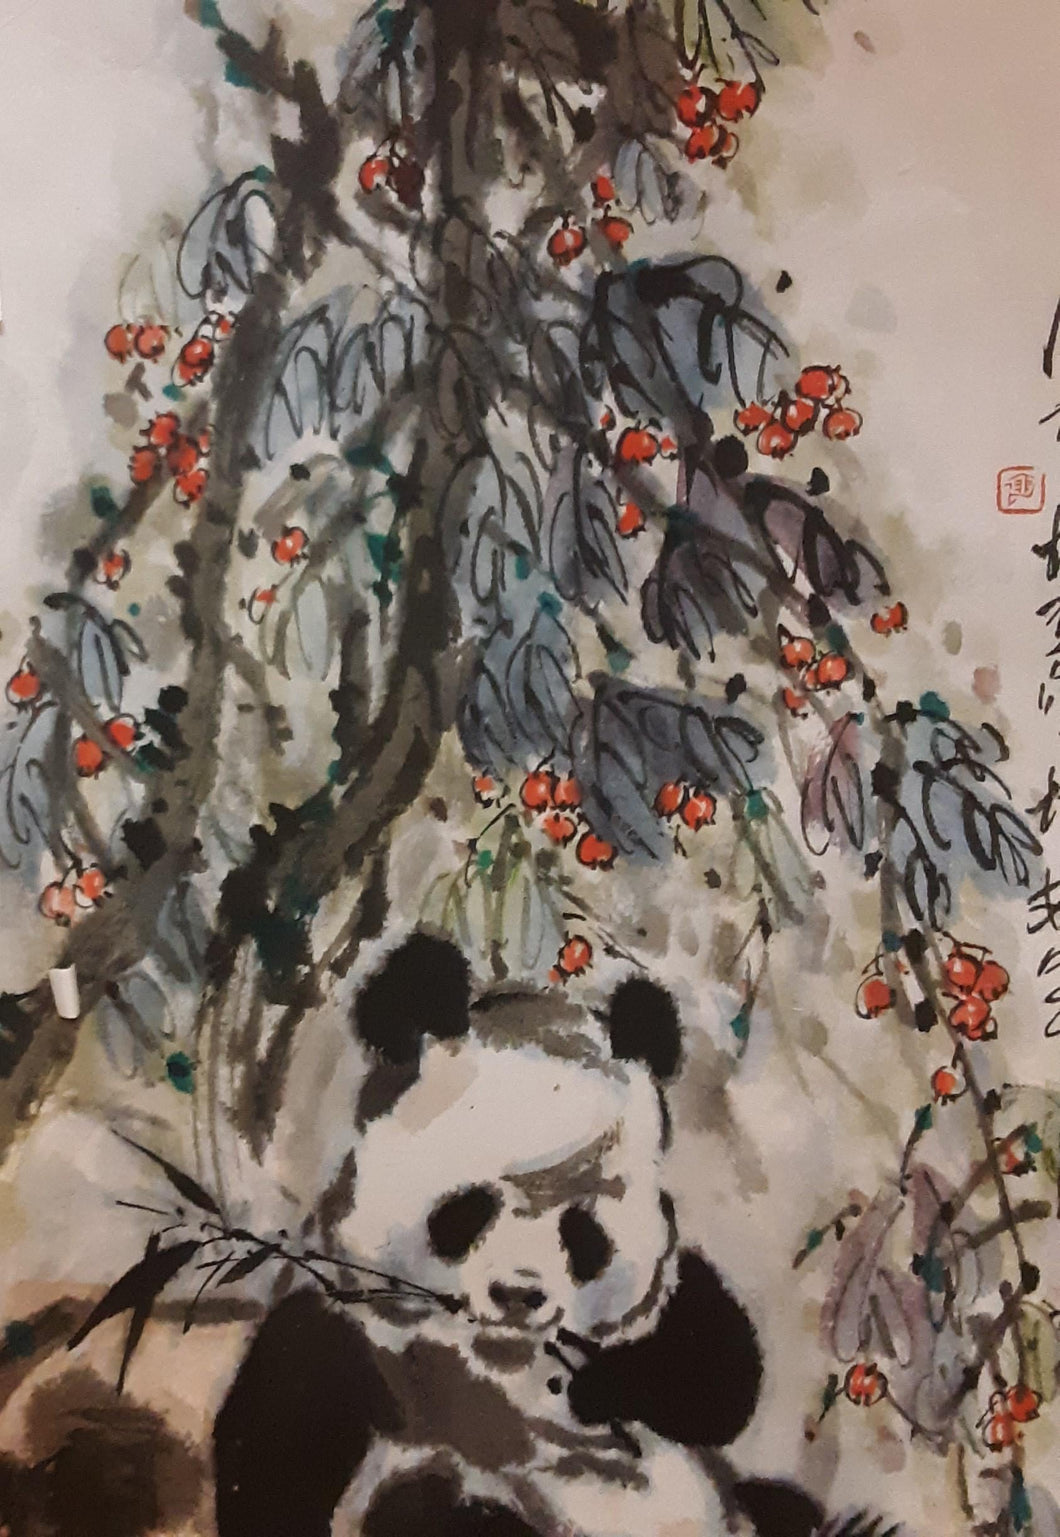 Painting of Panda by Wang Jun (王军) (Contemporary Chinese artist)